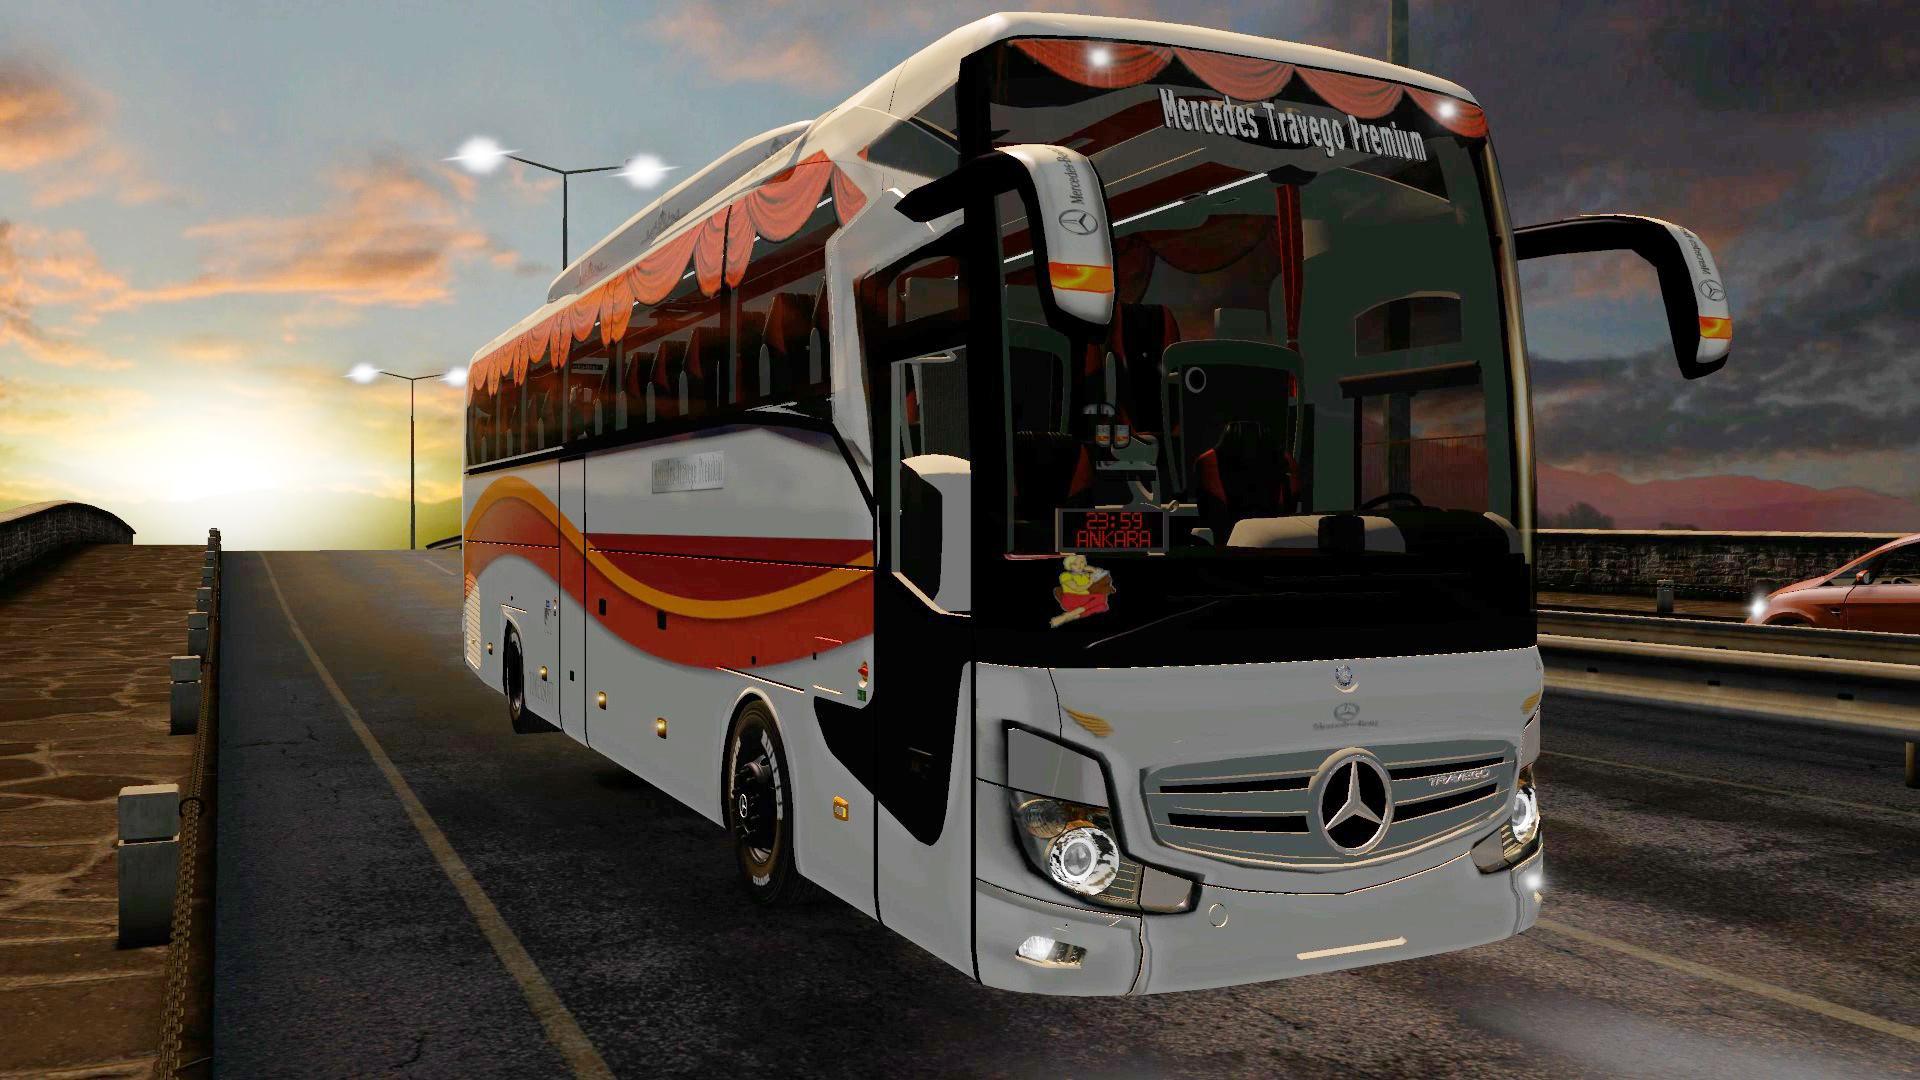 bus simulator 18 building bus model